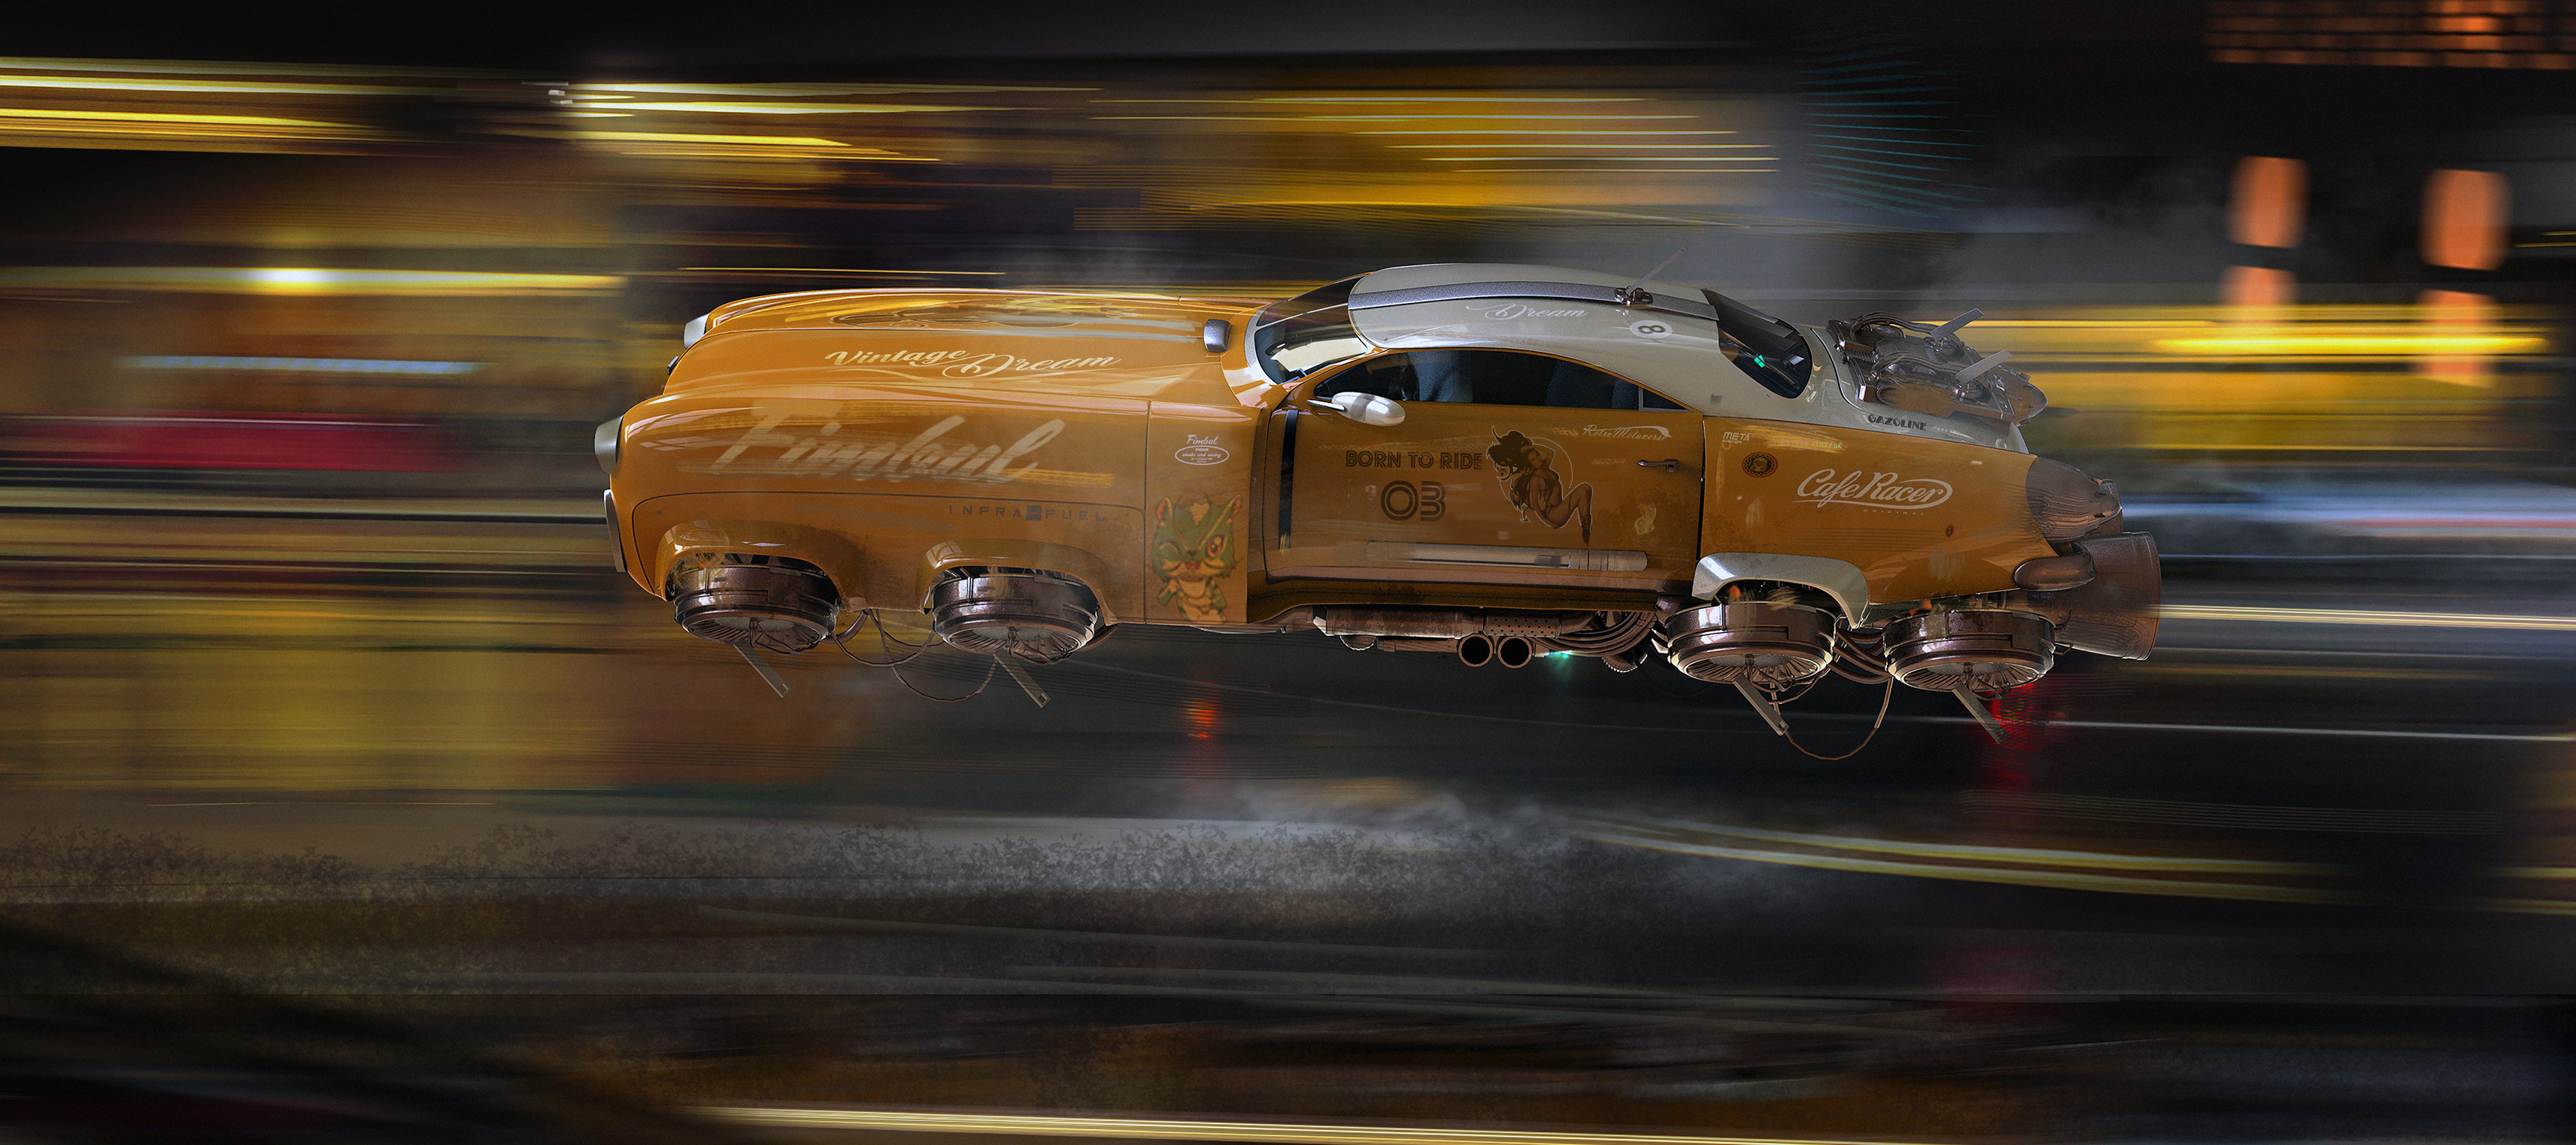 Artwork Futuristic Digital Art Car Vehicle Yellow Cars Science Fiction Fantasy Art 3425x1523